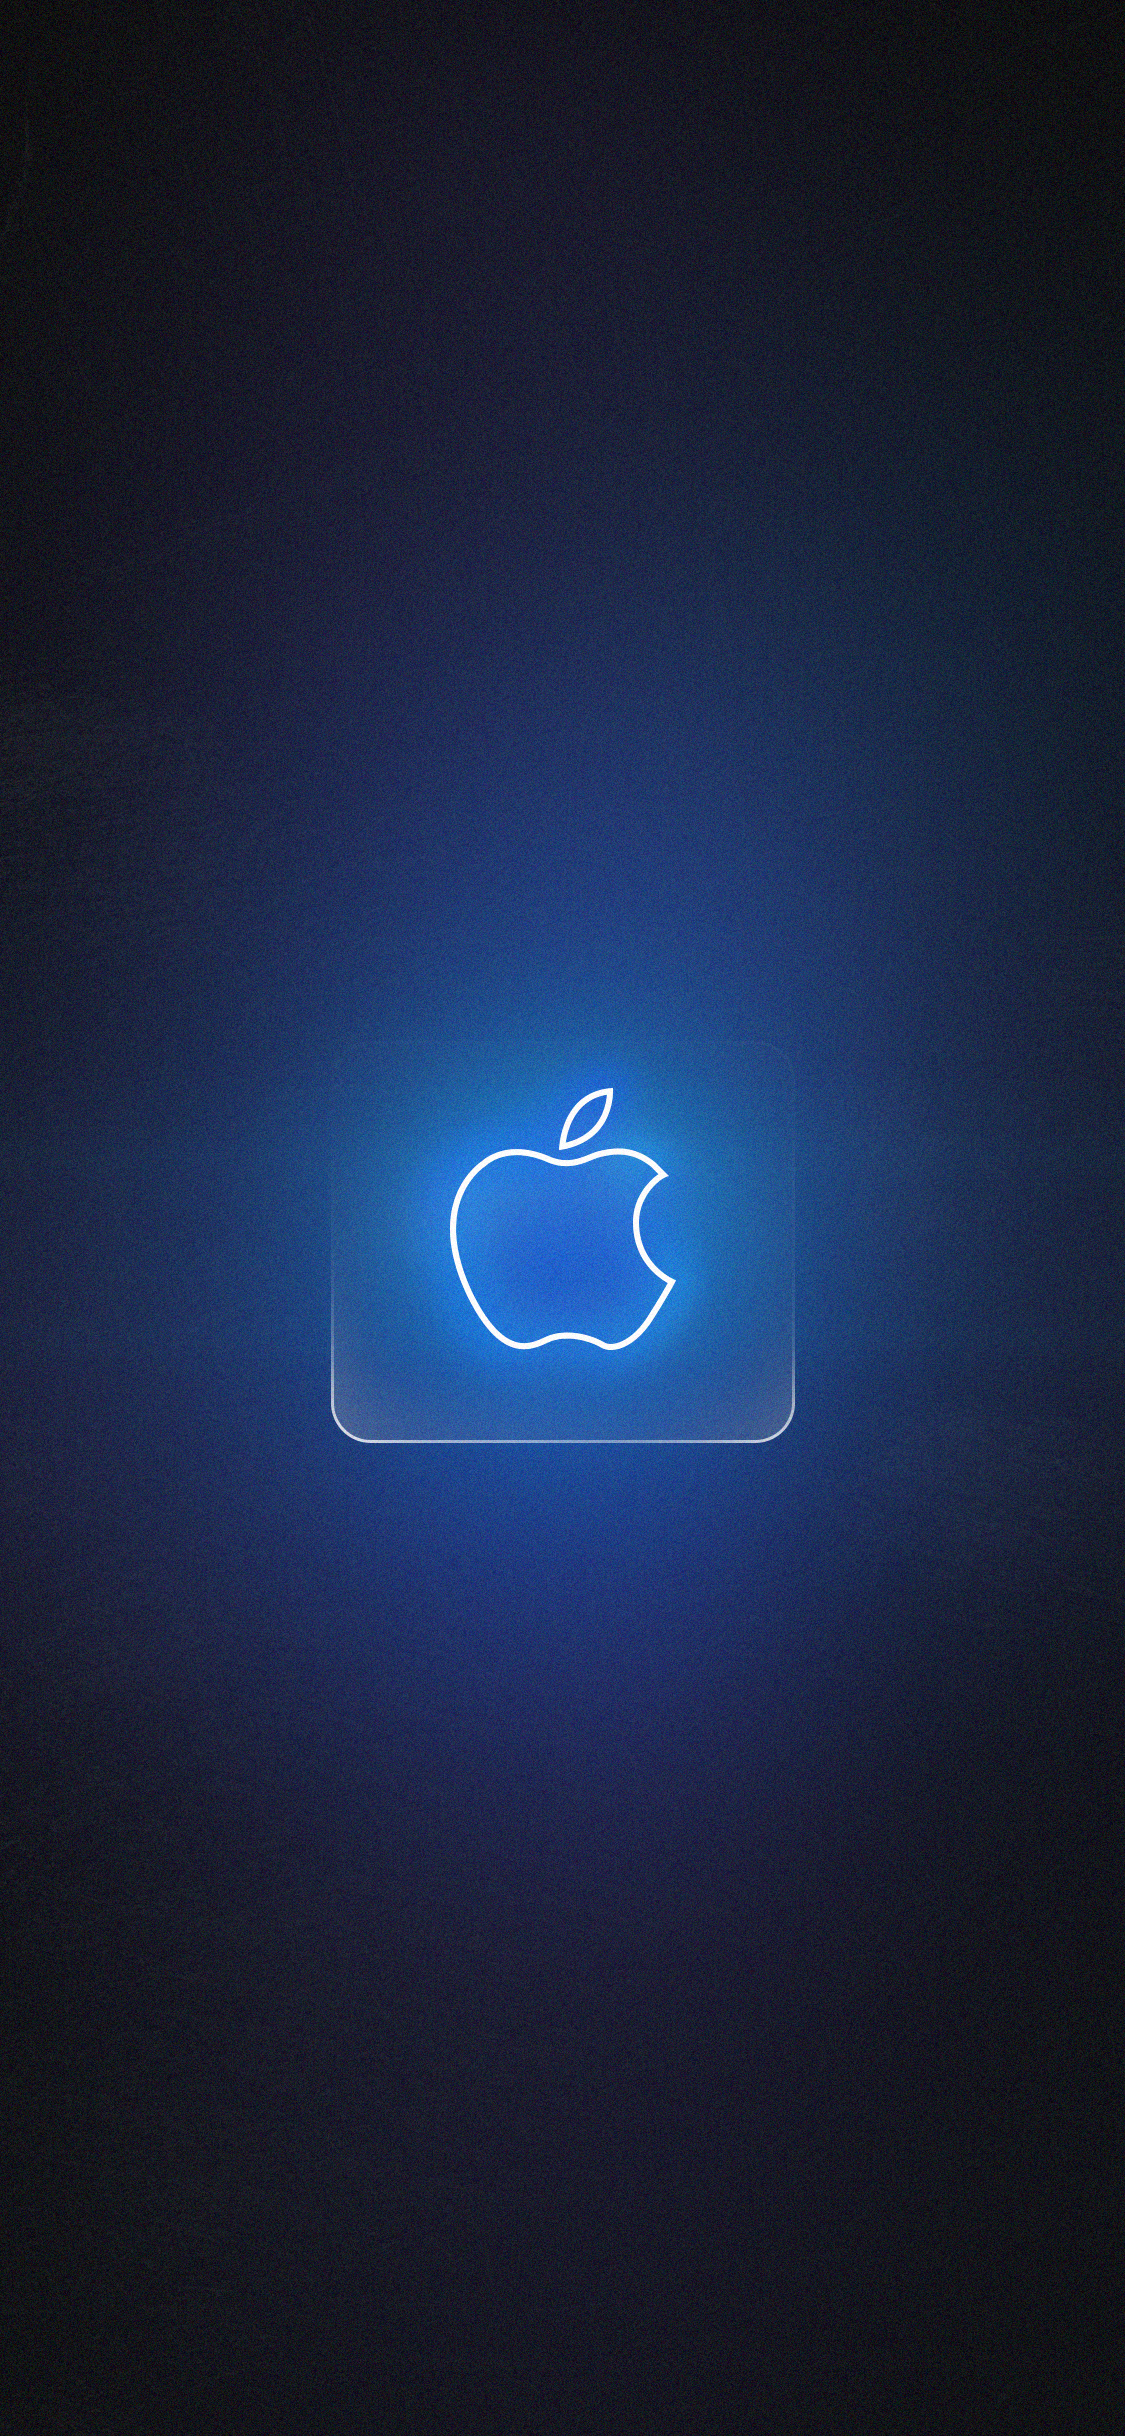 Stunning Apple logo wallpaper for iPhone